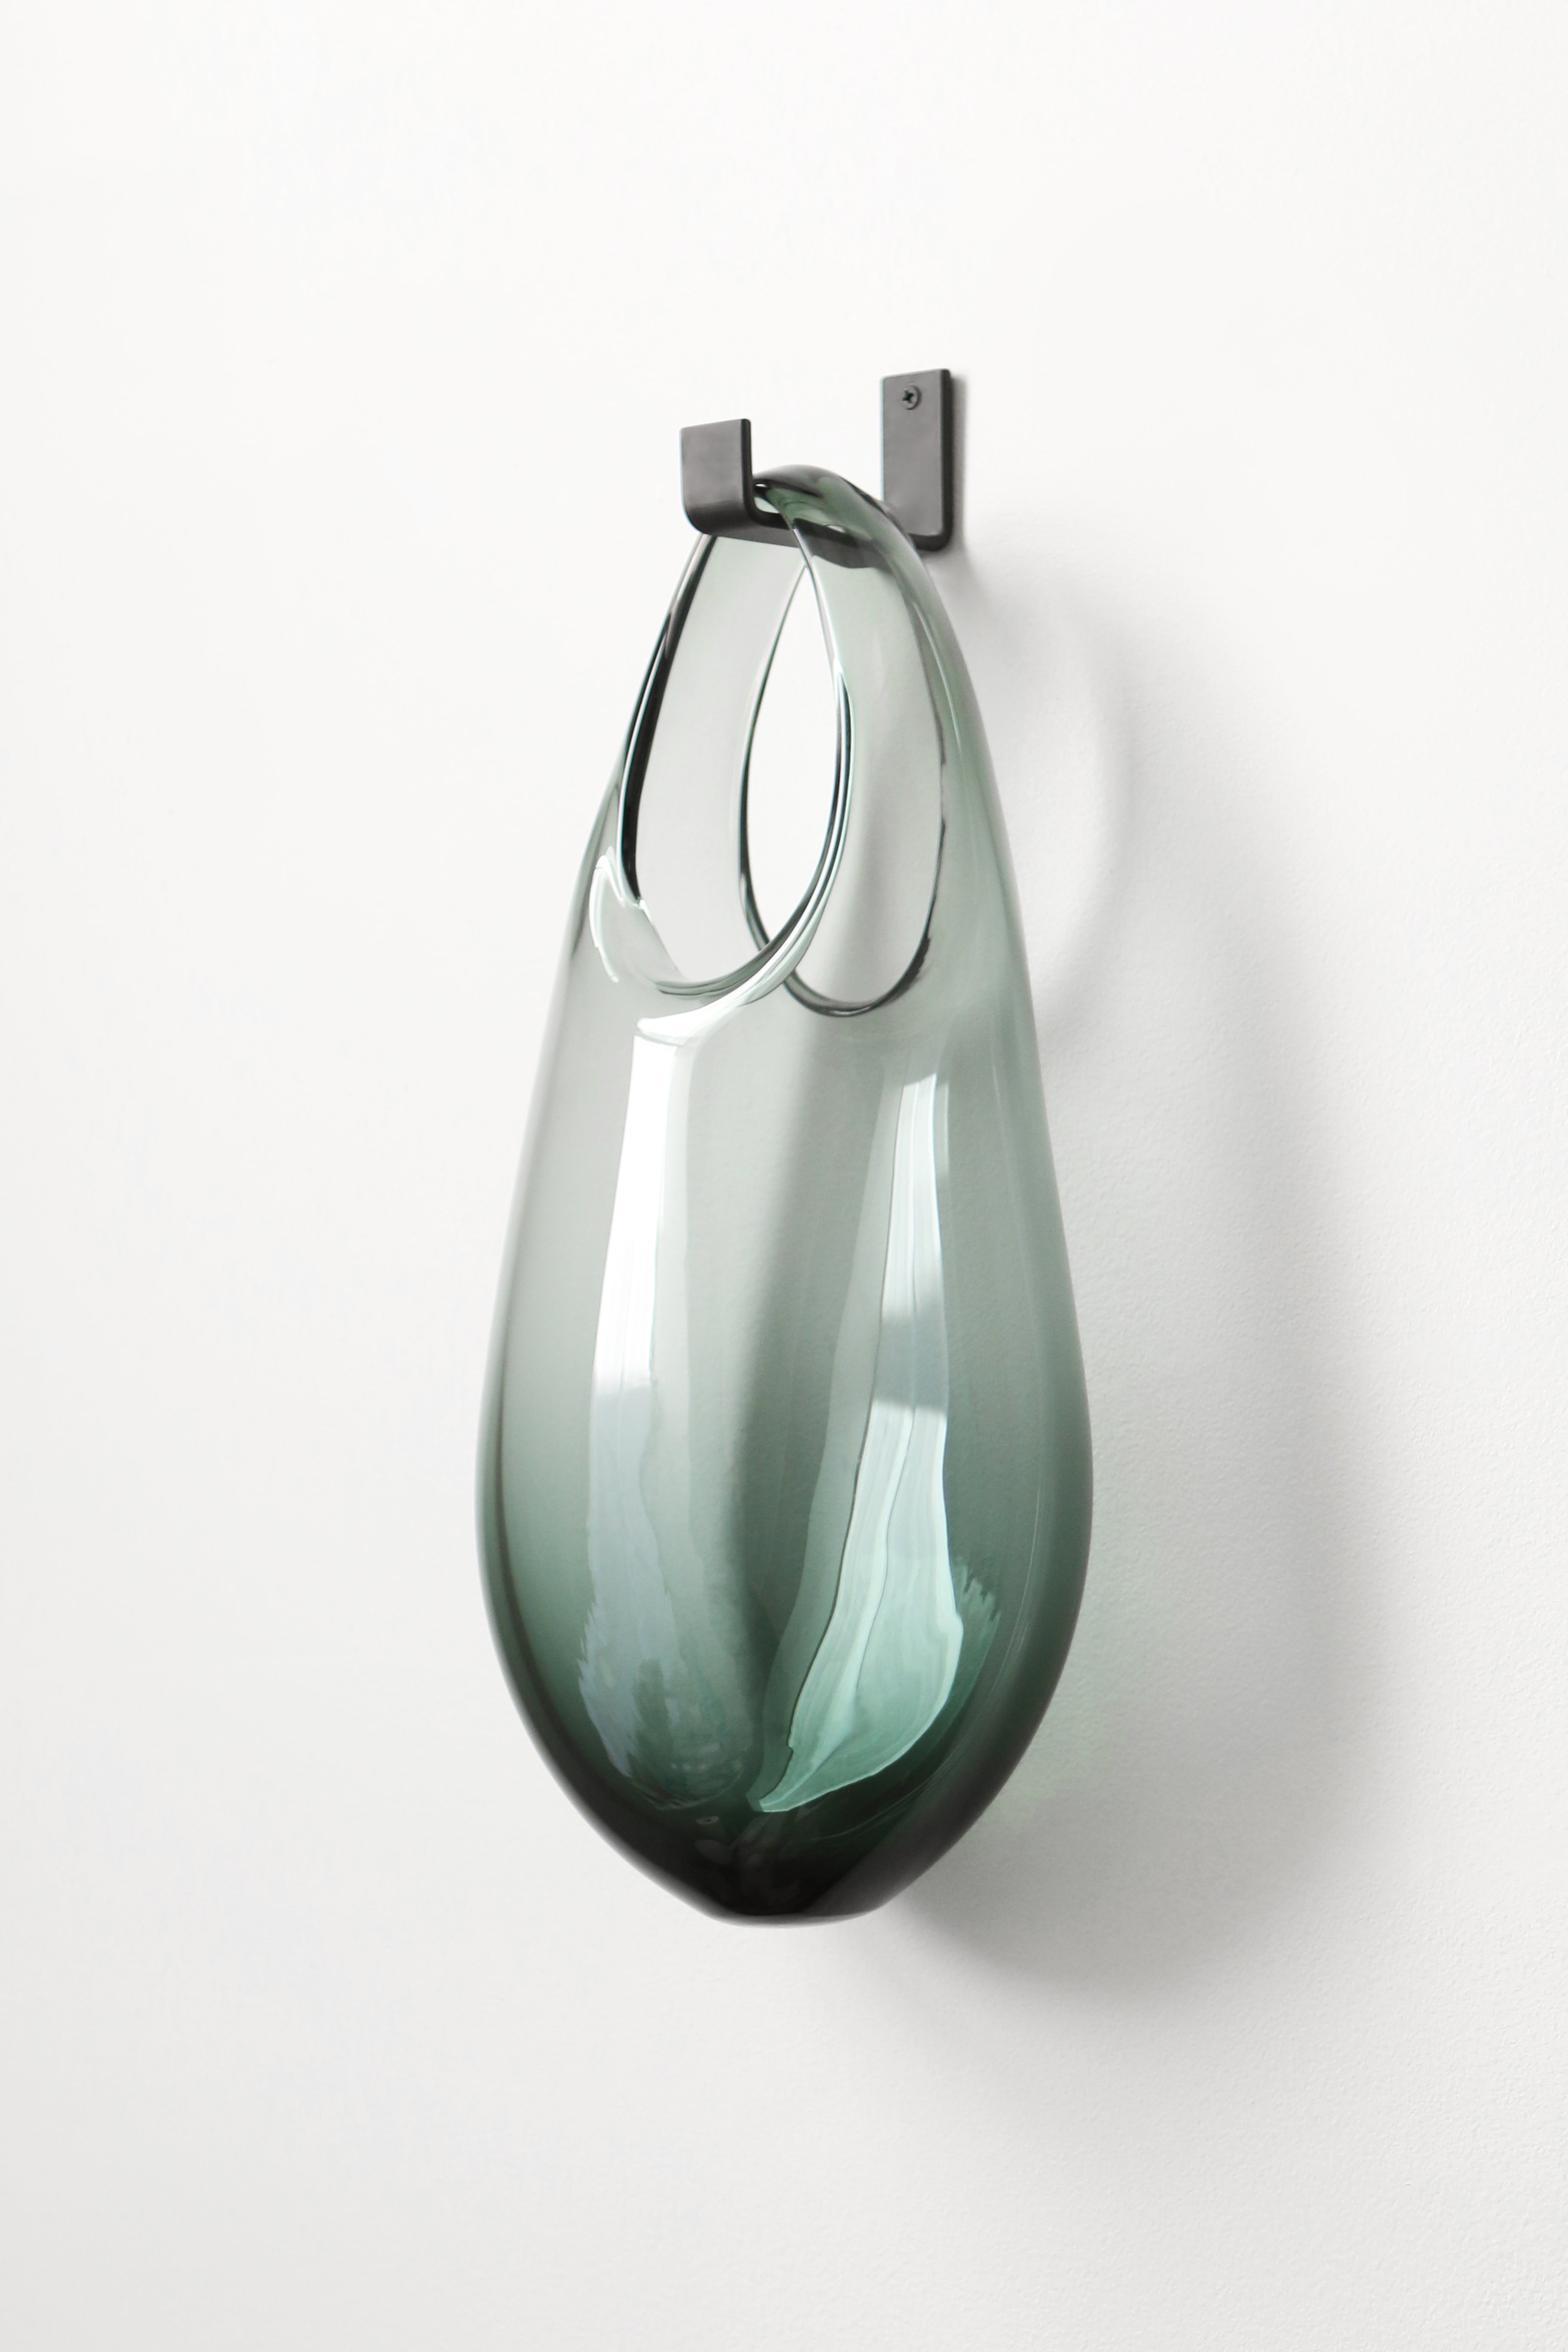 SkLO Hold Suspended Glass Wall Vase Vessel